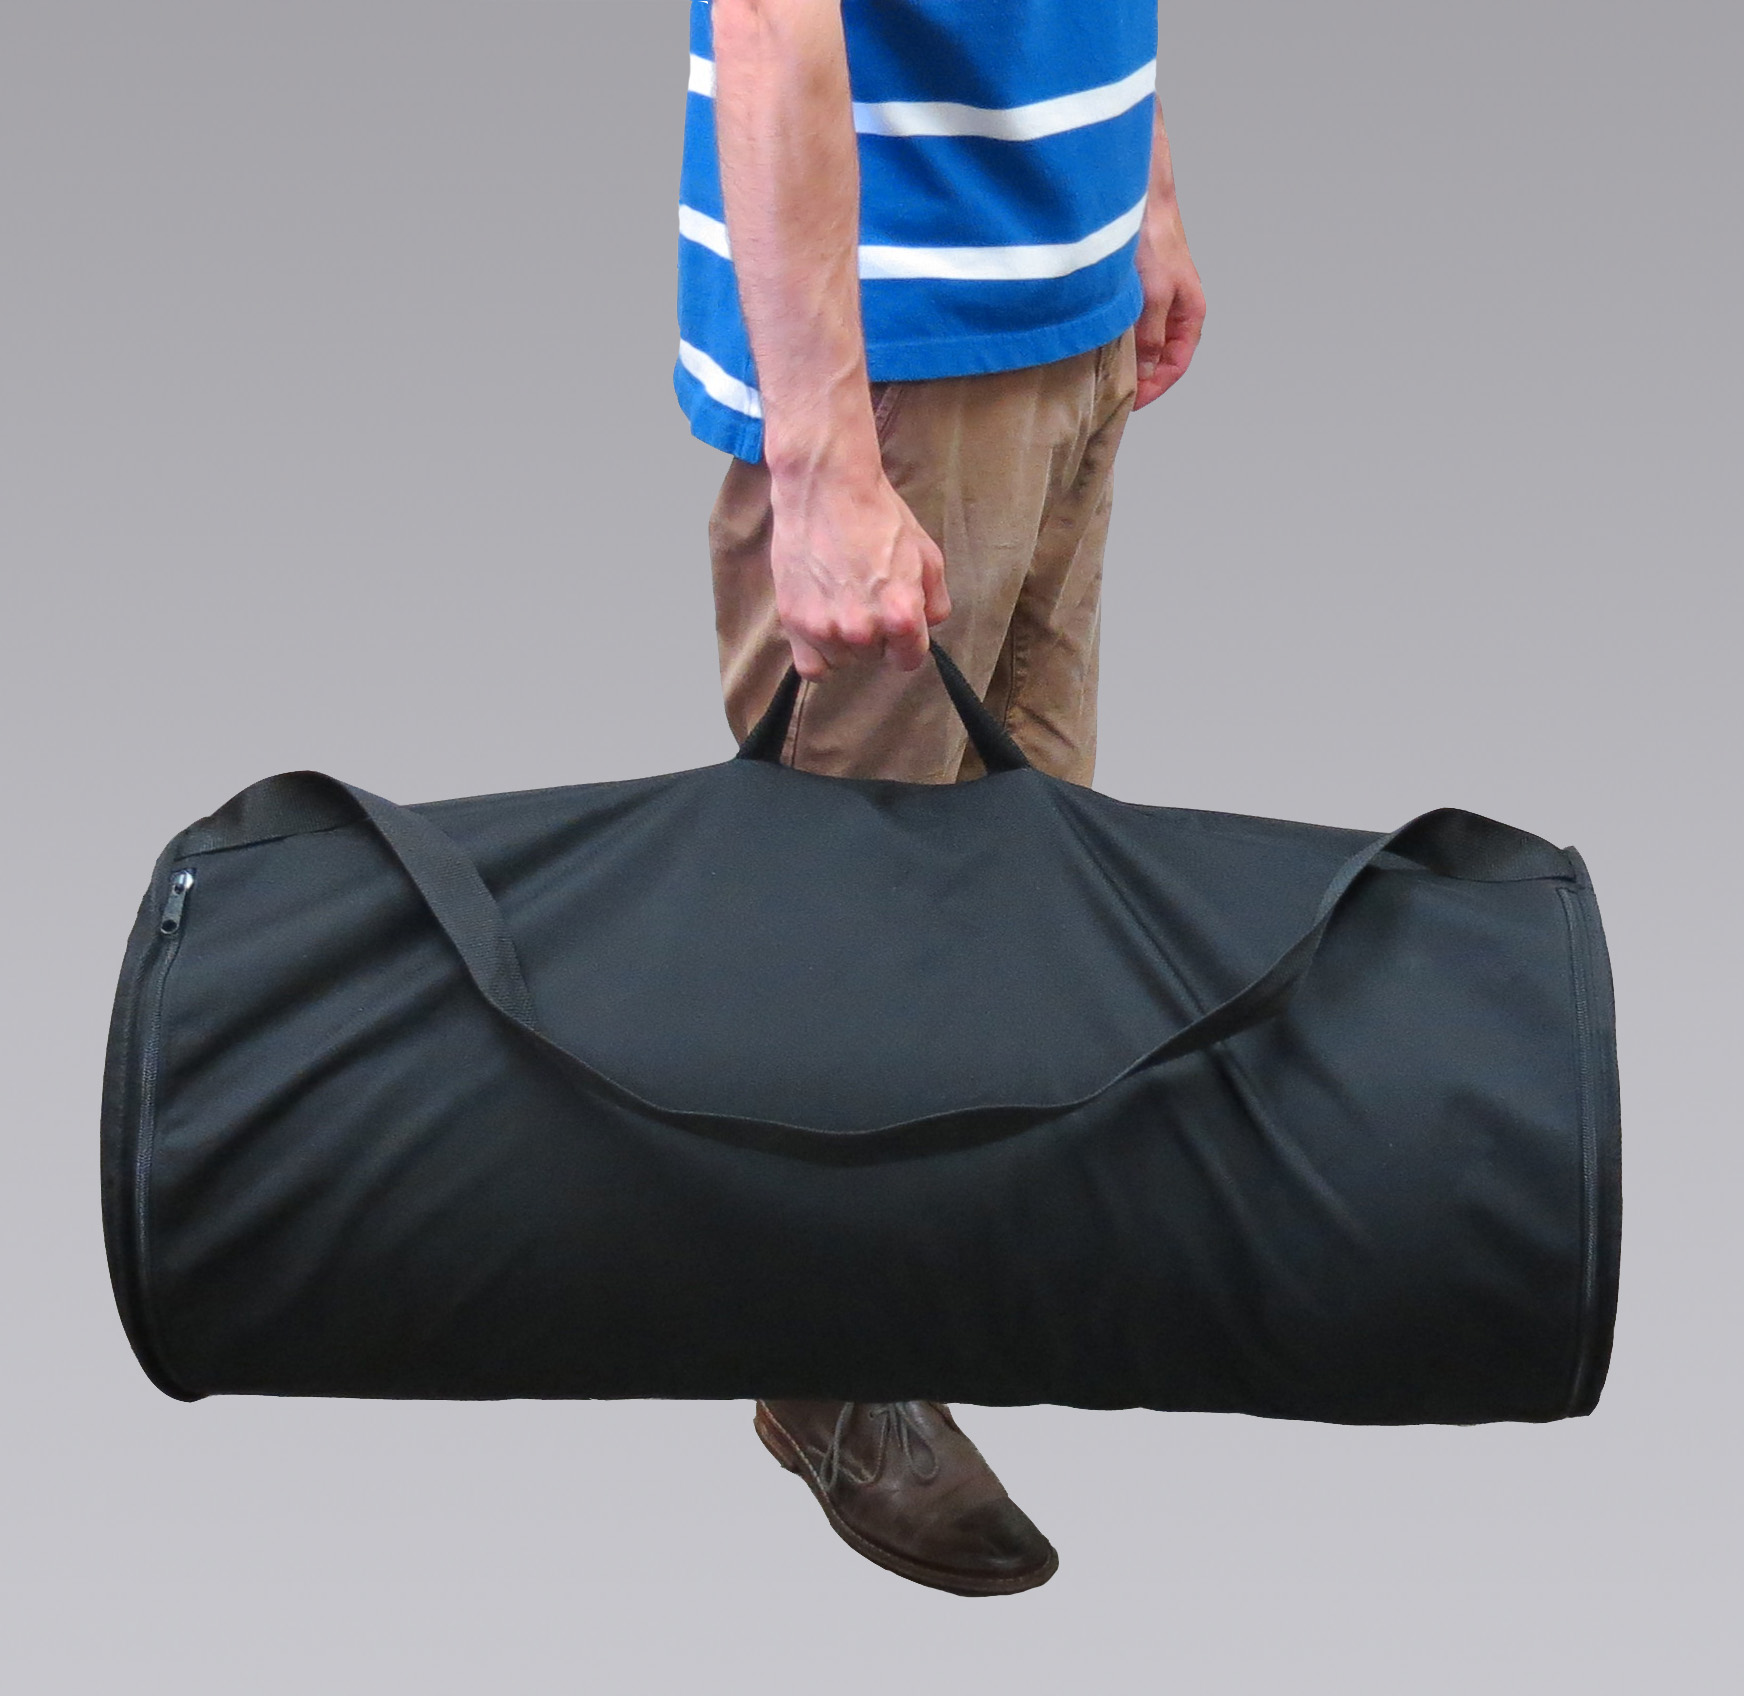 862683 - Hose Carrying Bag - NIKRO Industries, Inc.